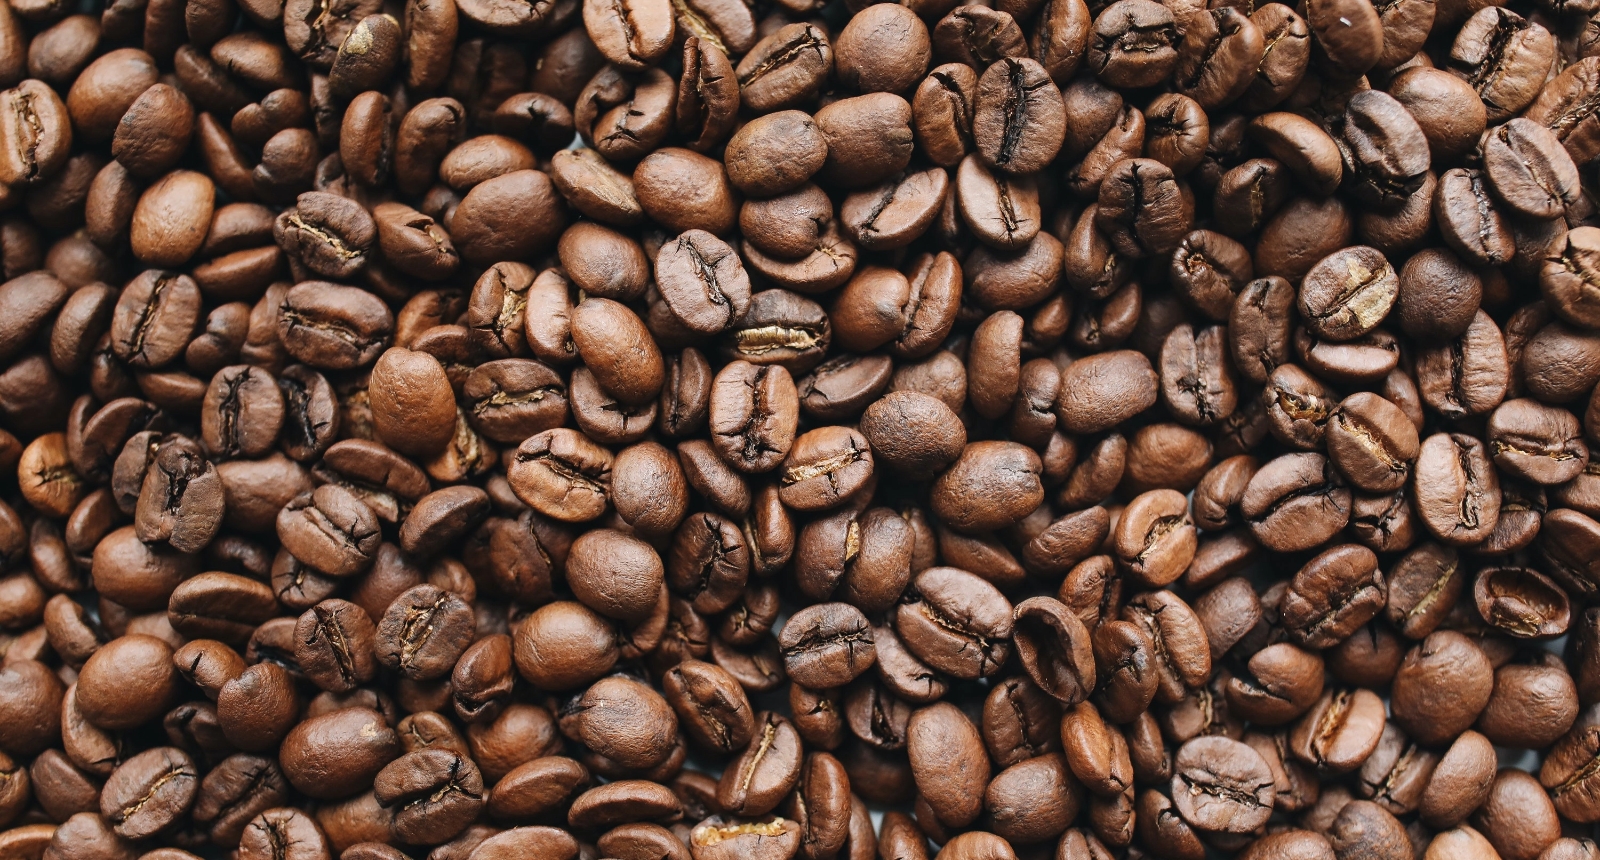 Harvesting & Processing Coffee